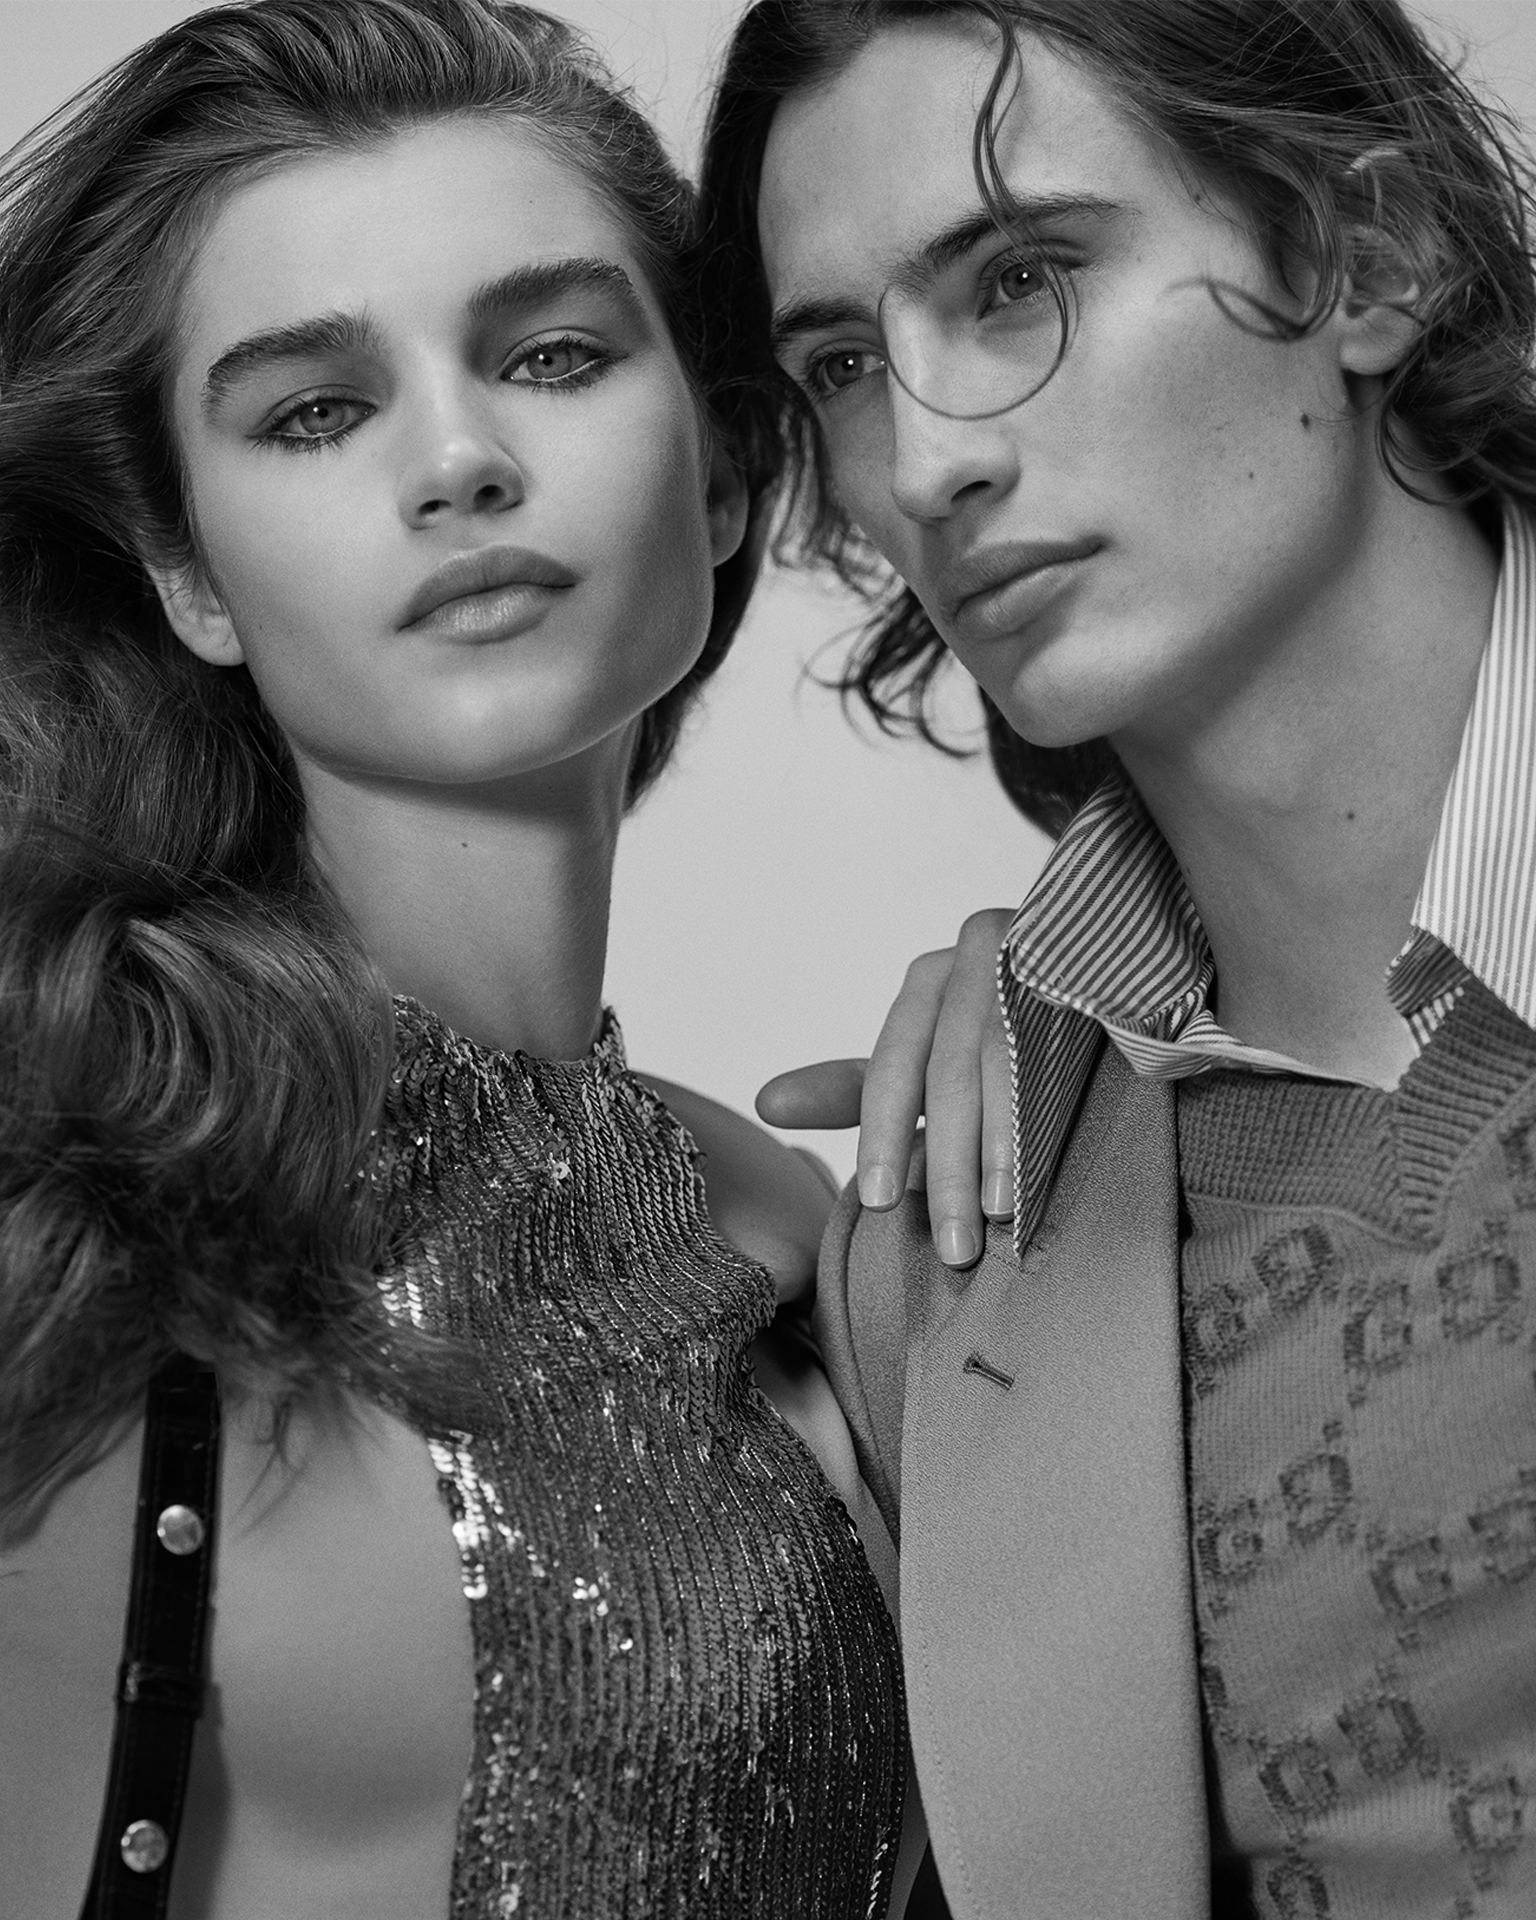  Meghan and James in Gucci. On eyes (Meghan) L'Oréal Paris Bambi Mascara